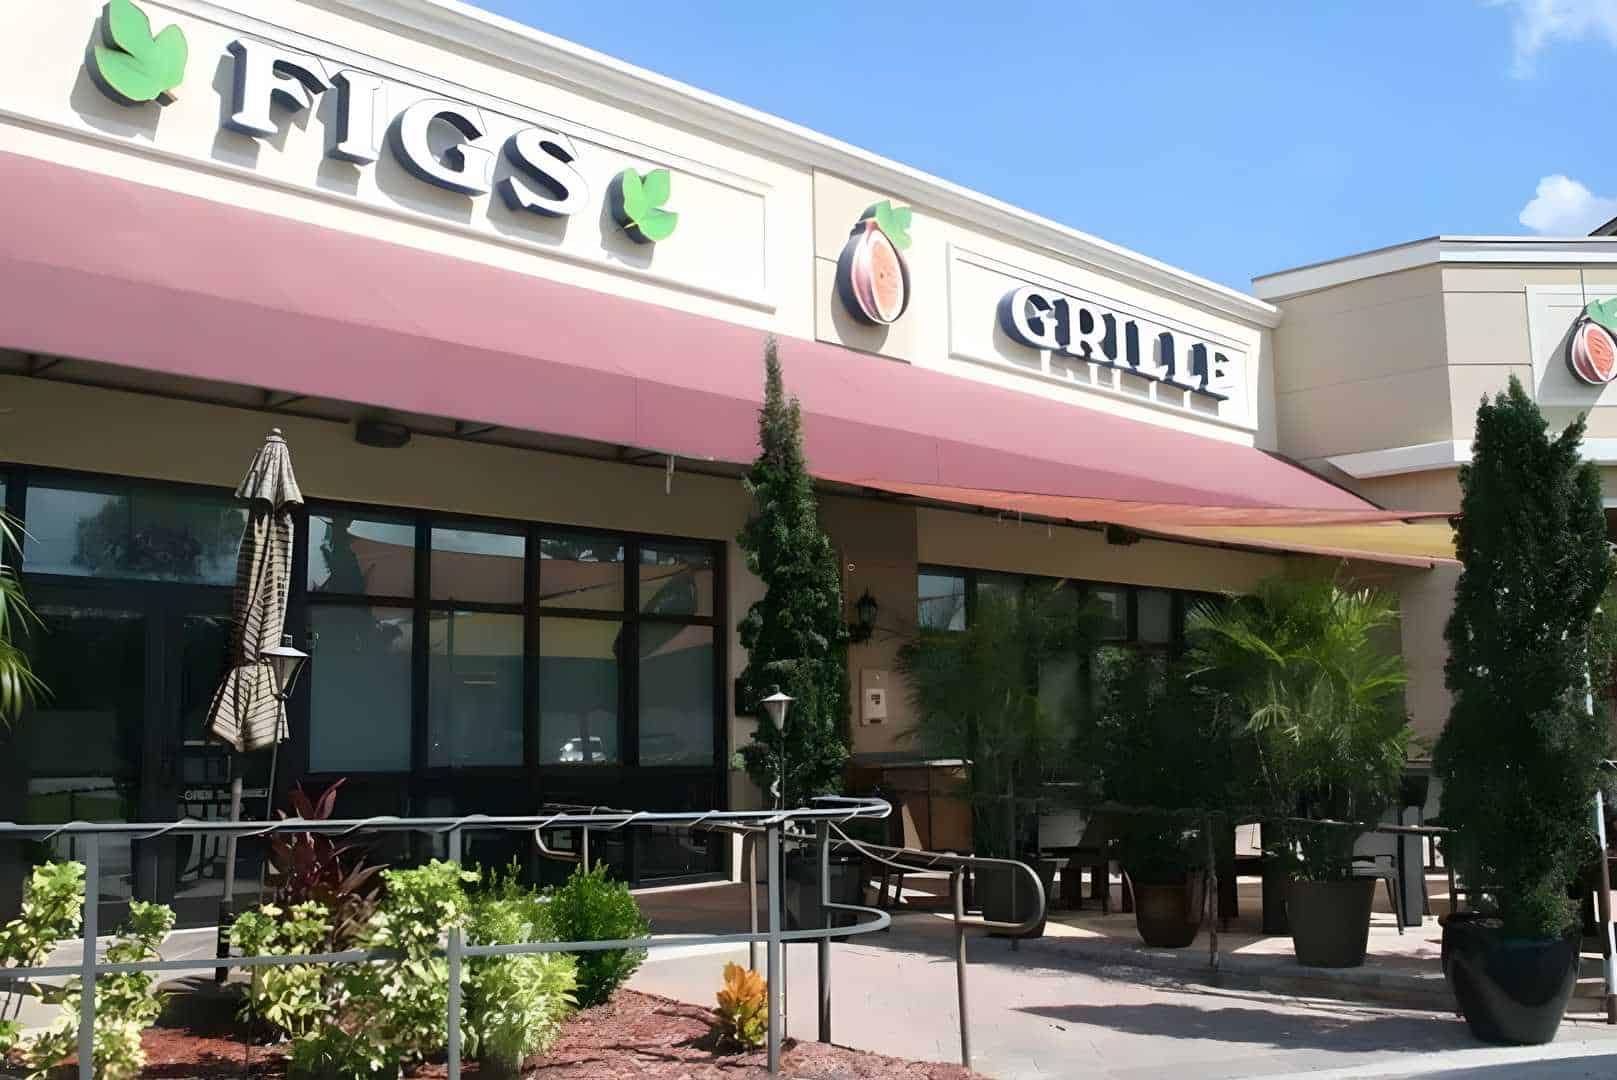 Figs Grille Best Restaurants in Bonita Springs, FL